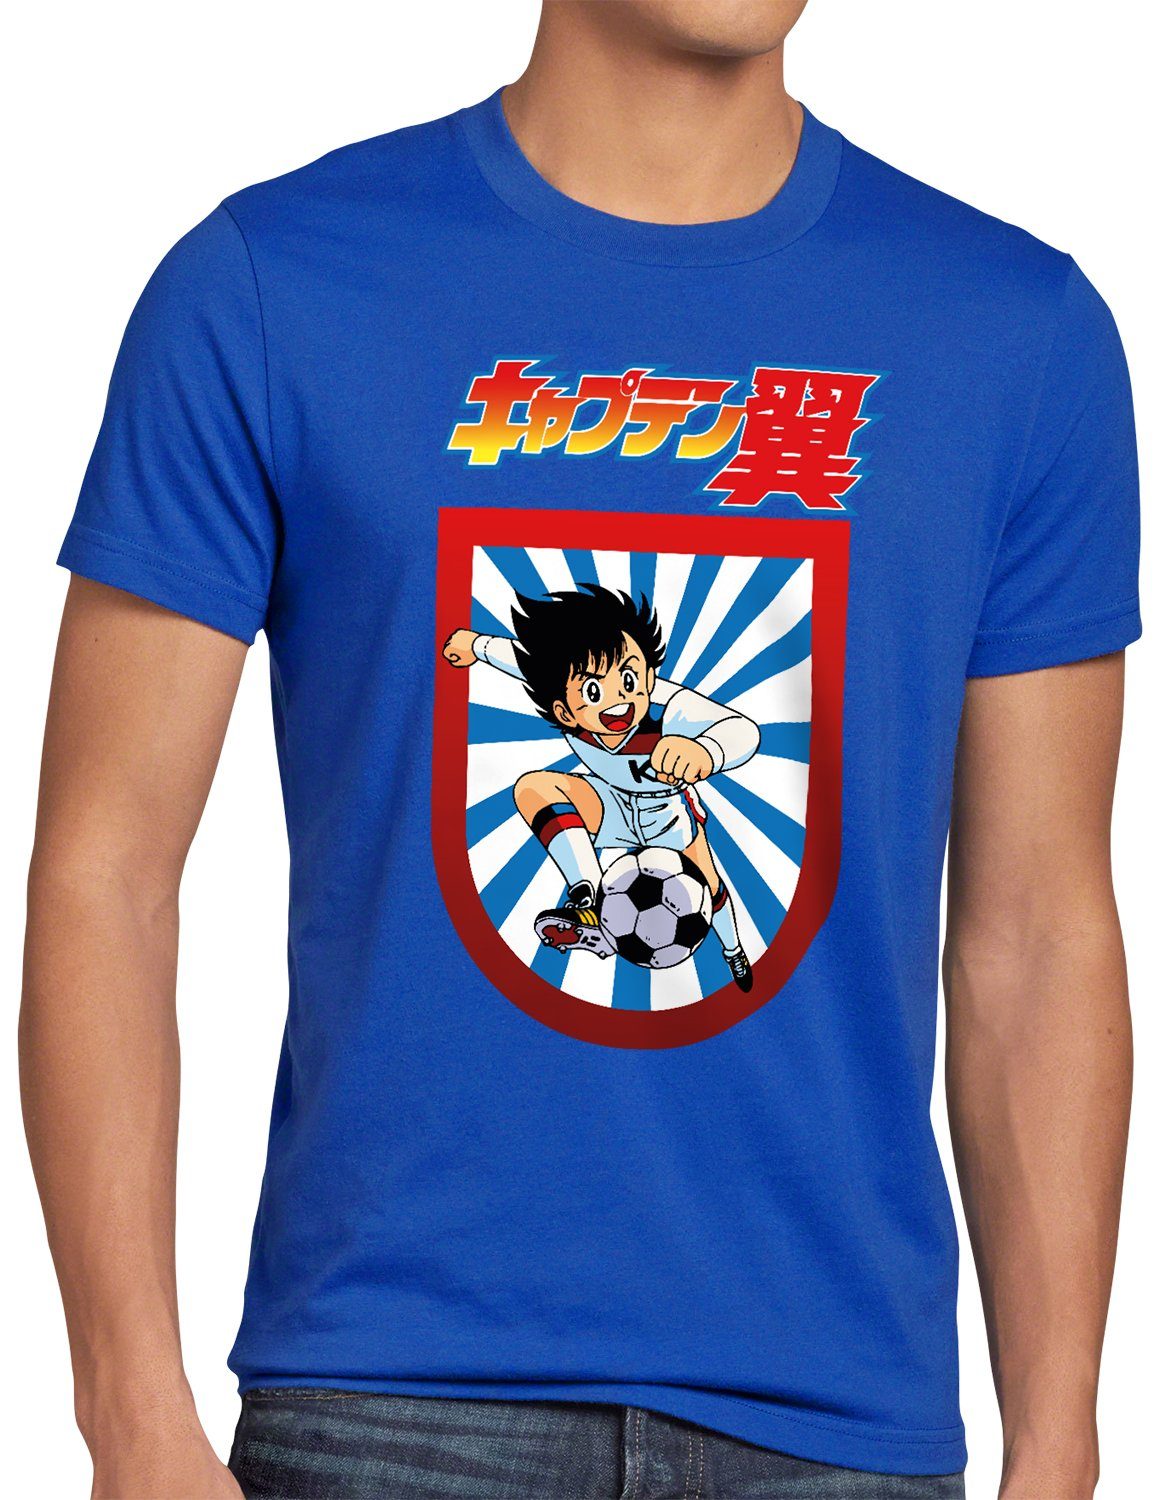 style3 Print-Shirt Herren wm tollen fußballstars T-Shirt Tsubasa blau em